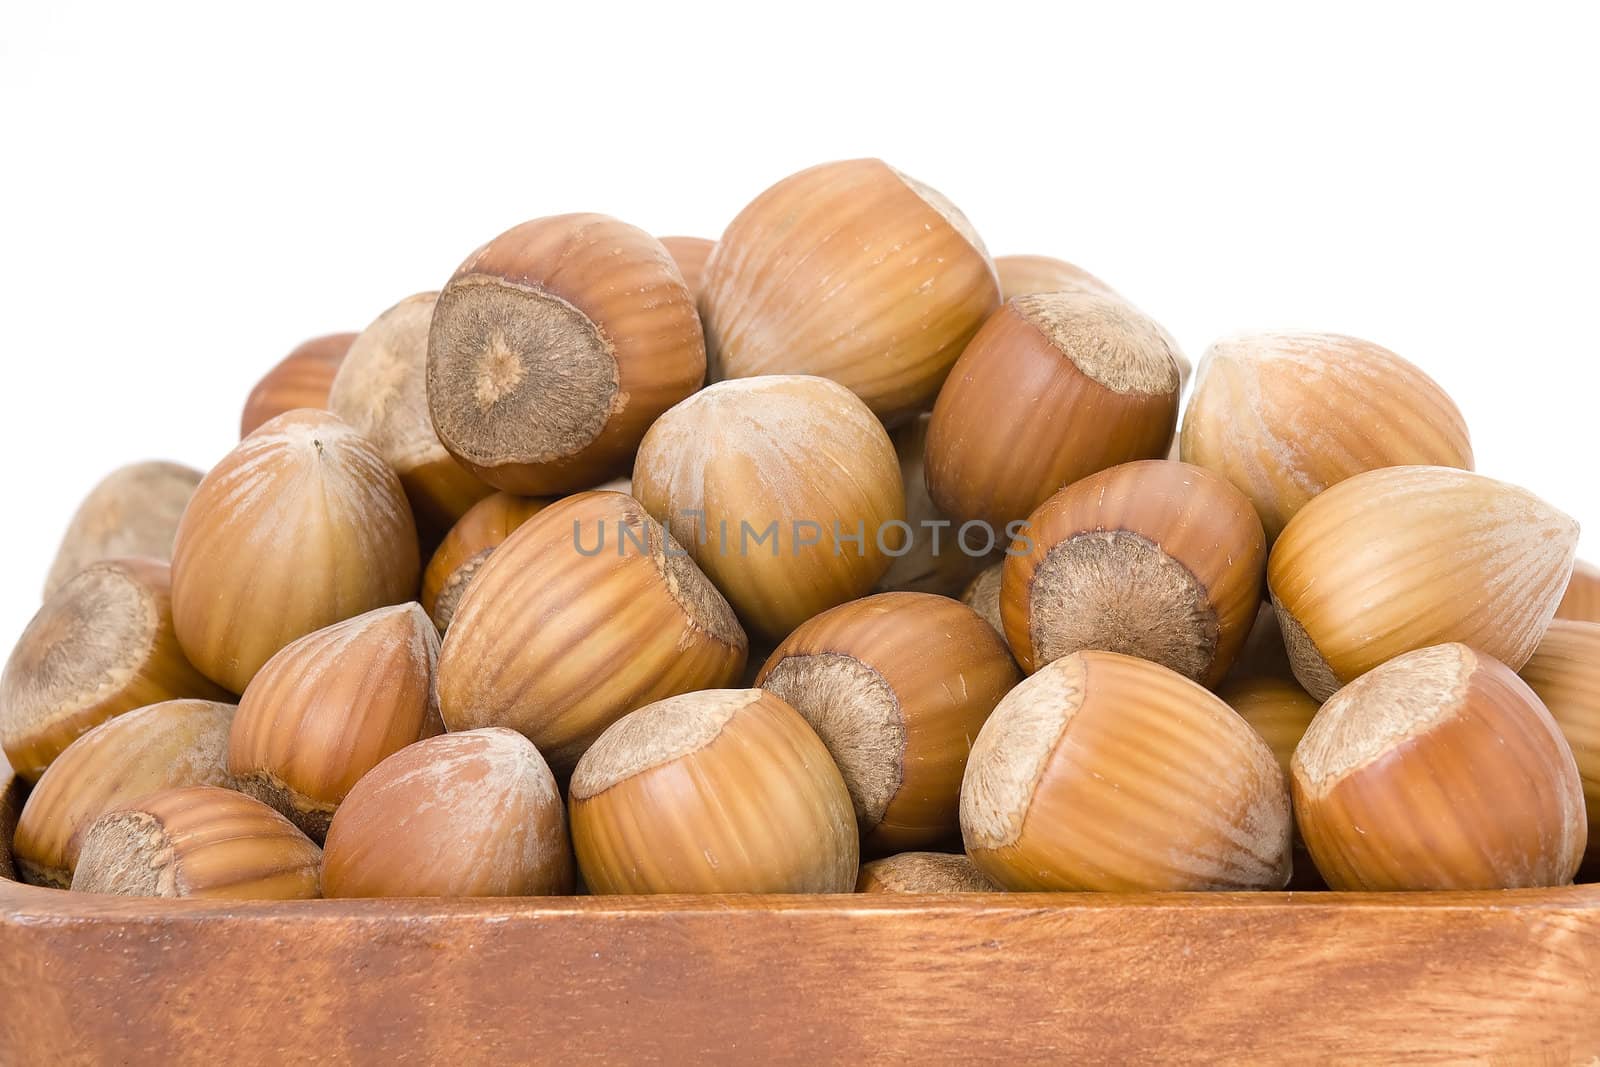 close up of hazelnuts